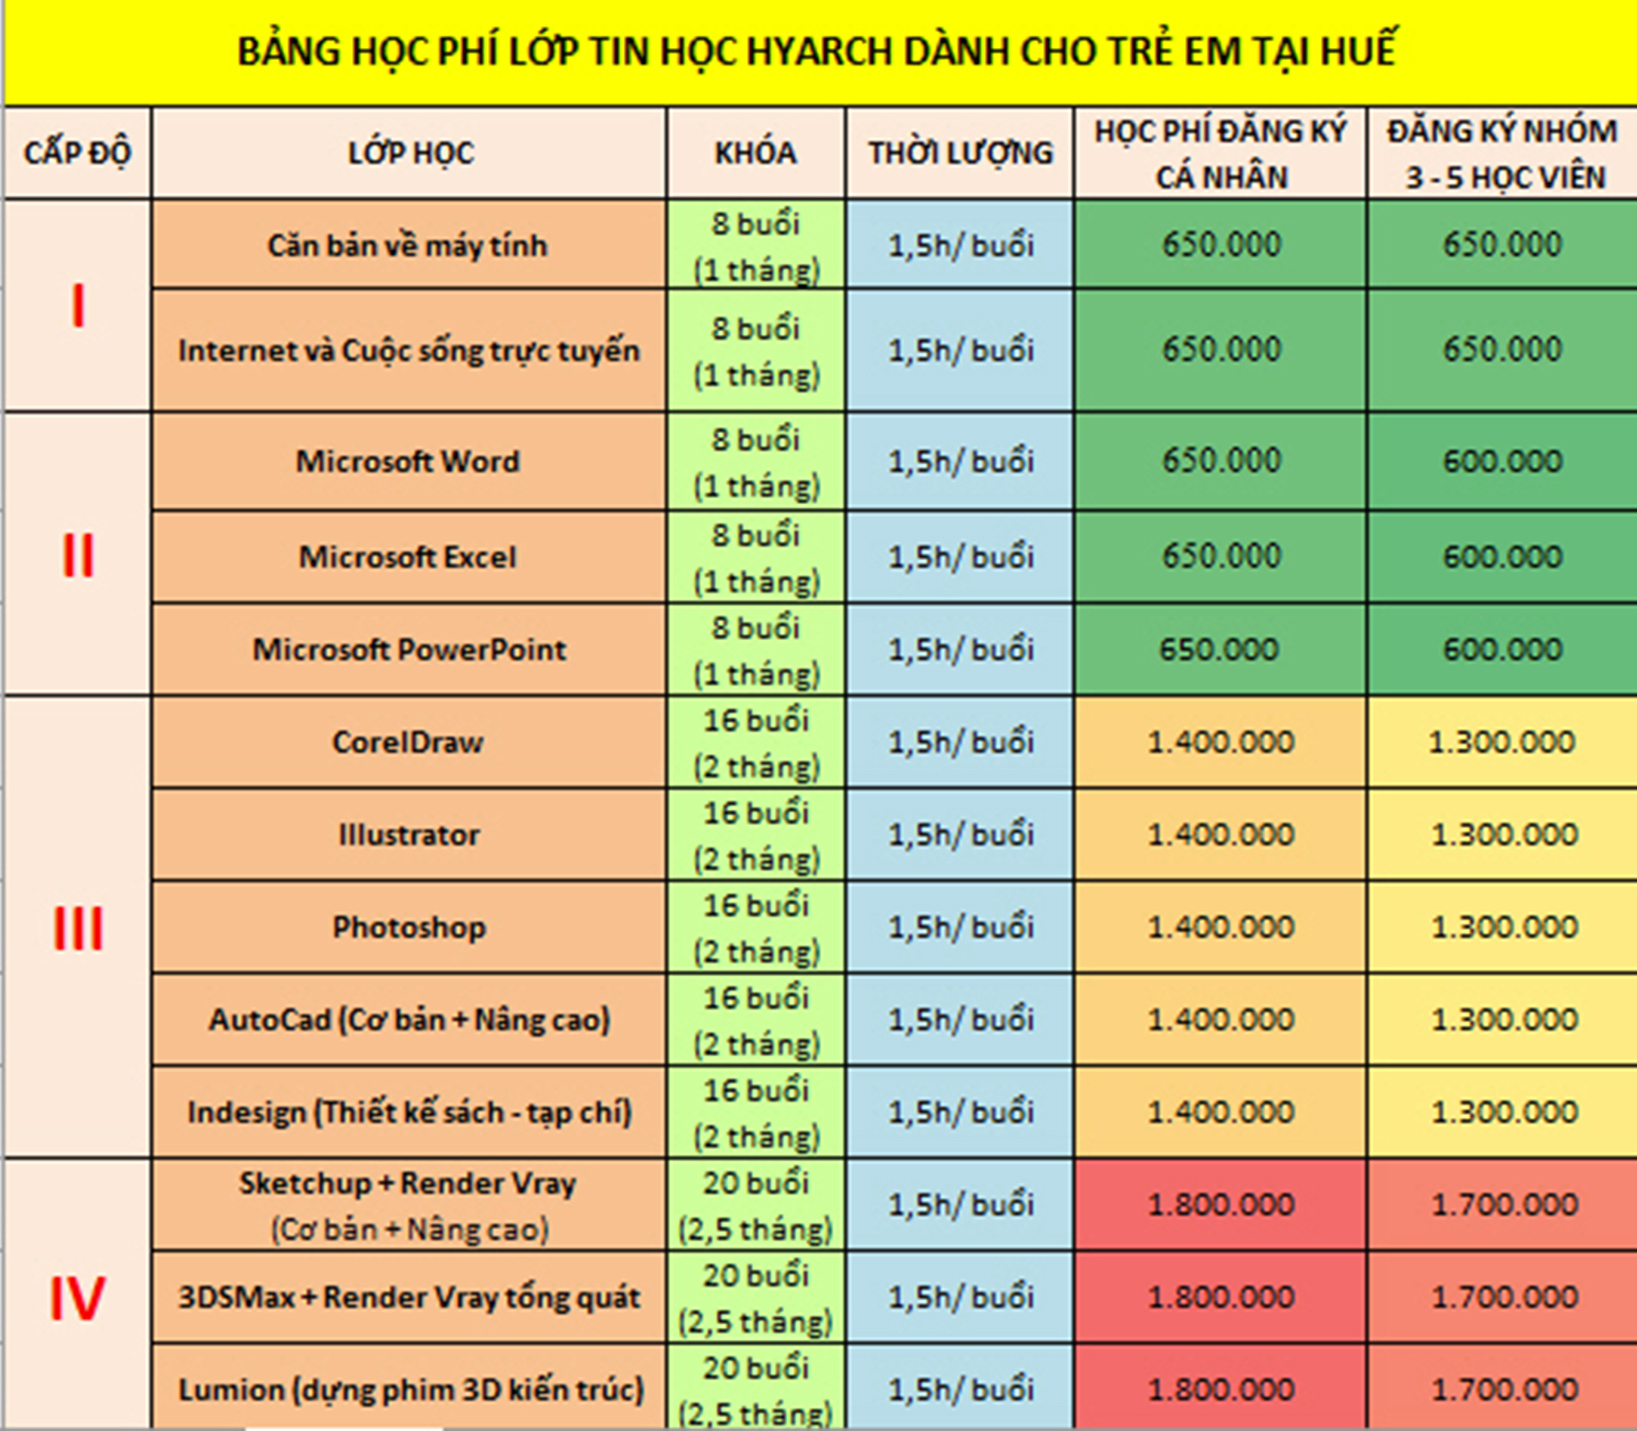 BANG HOC PHI TRE EM HYARCH THAY1111.jpg (1.07 MB)